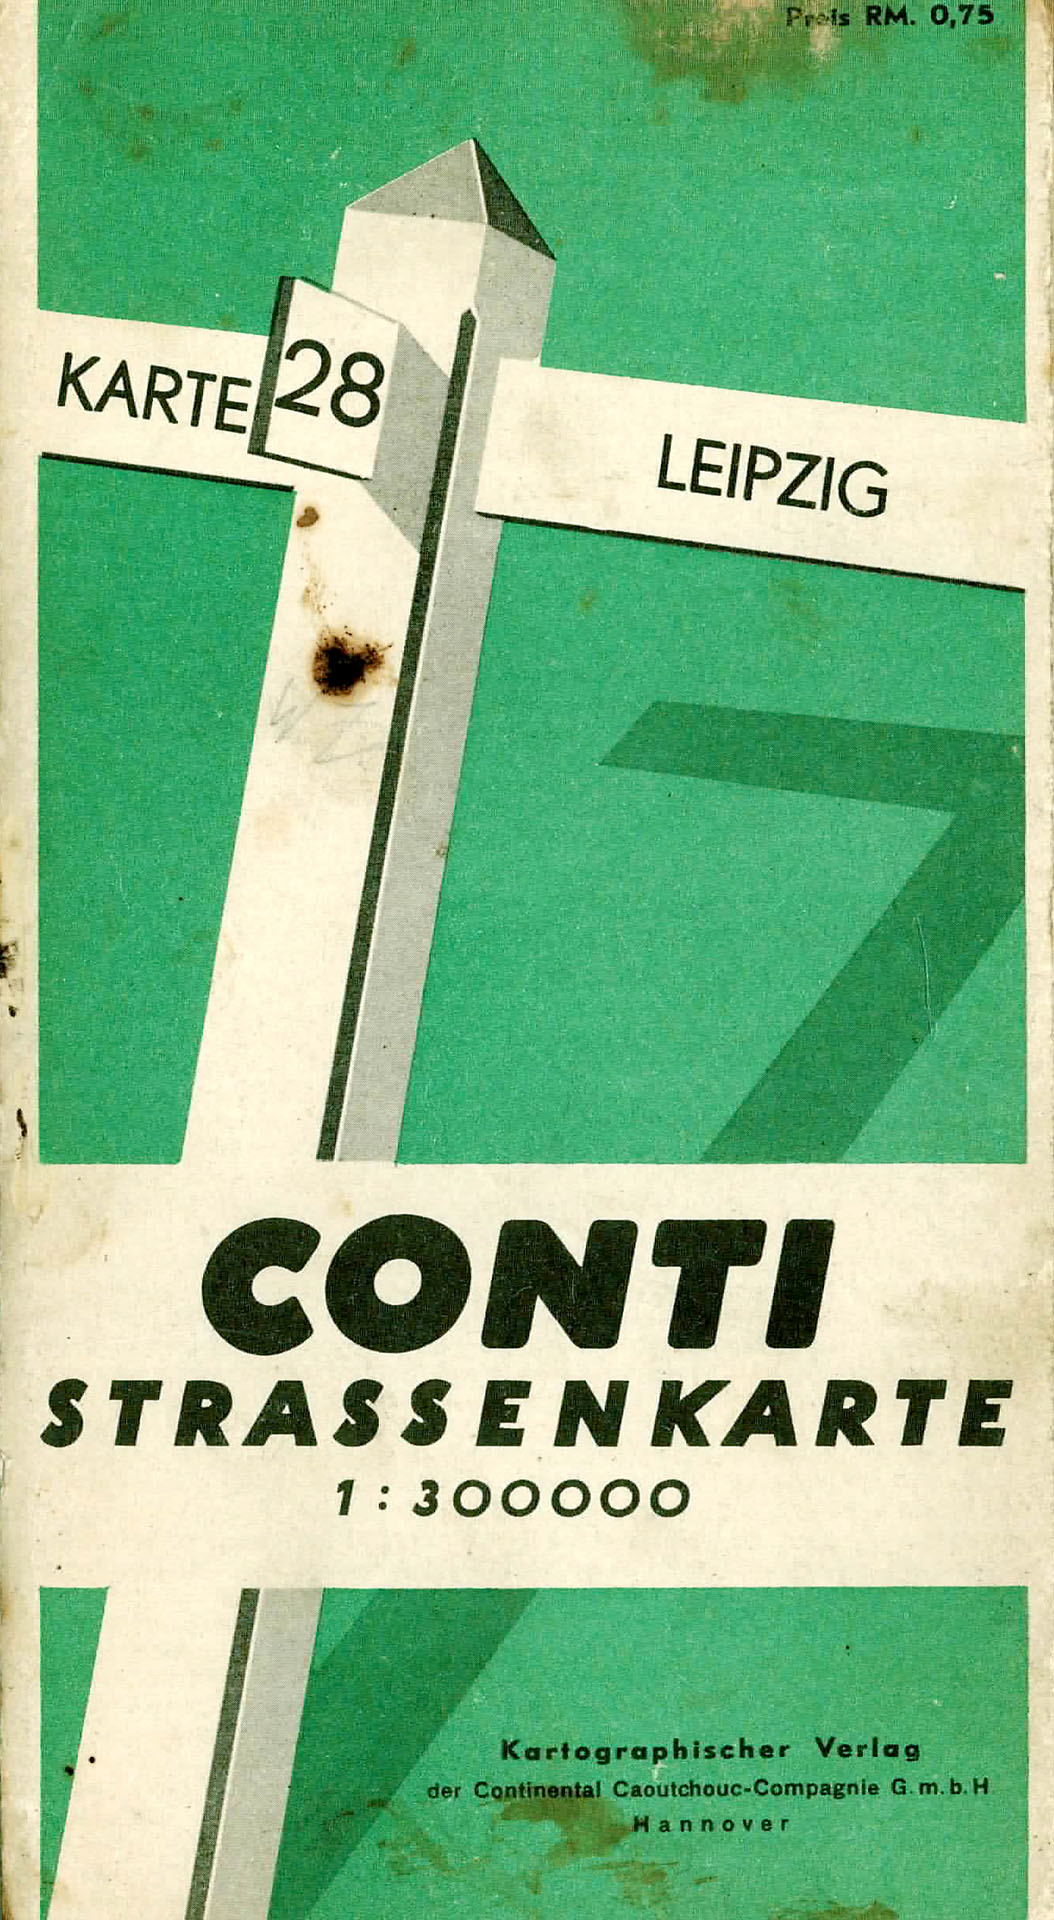 Continental Straßenkarte Leipzig